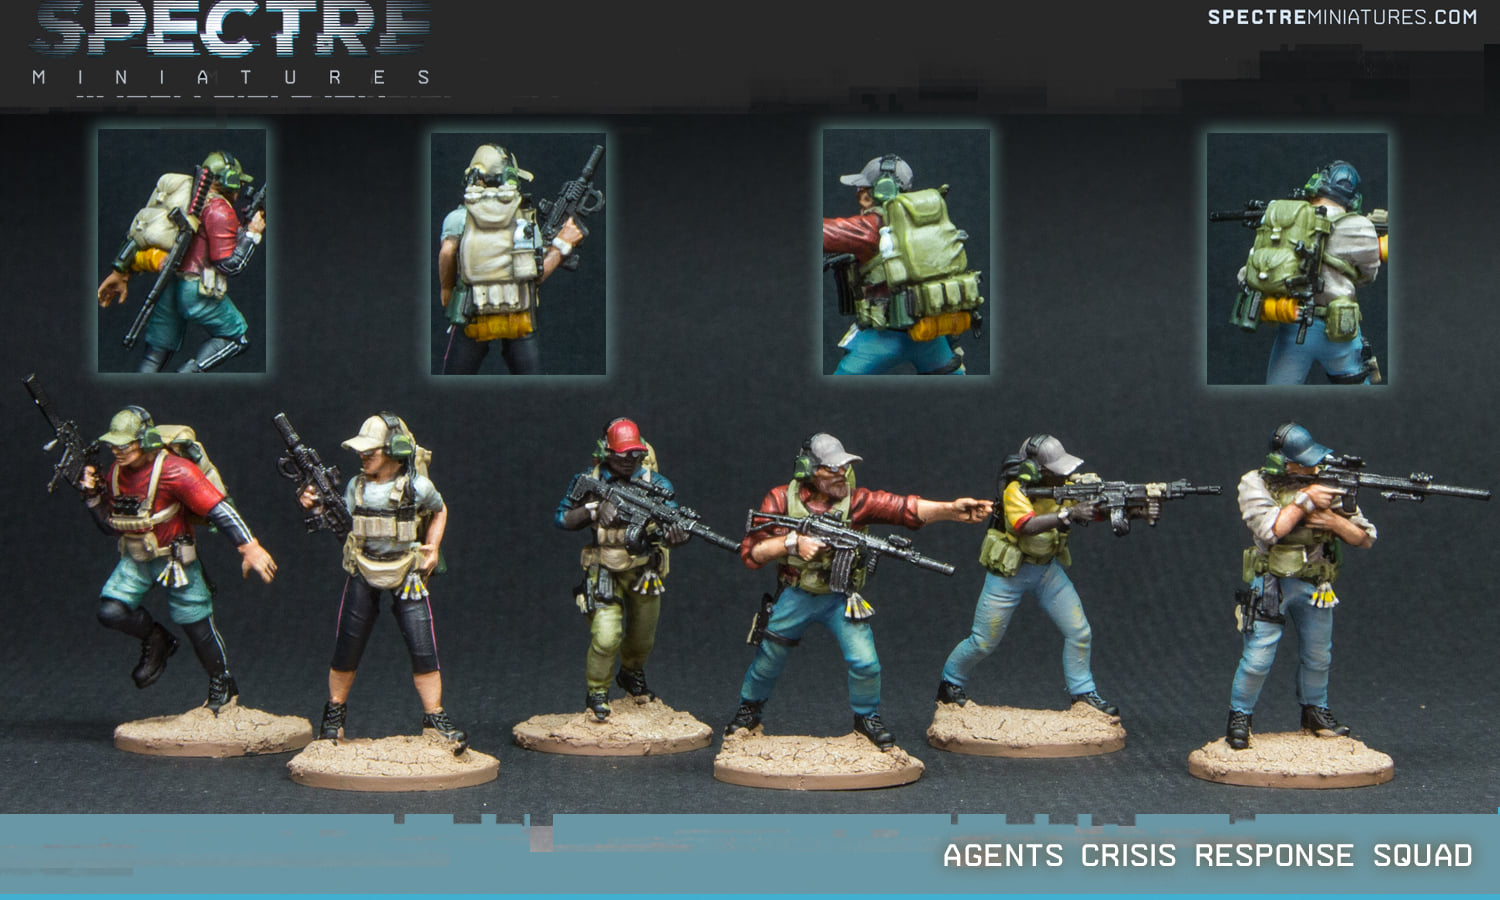 Agents Crisis Response Squad - Spectre Miniatures